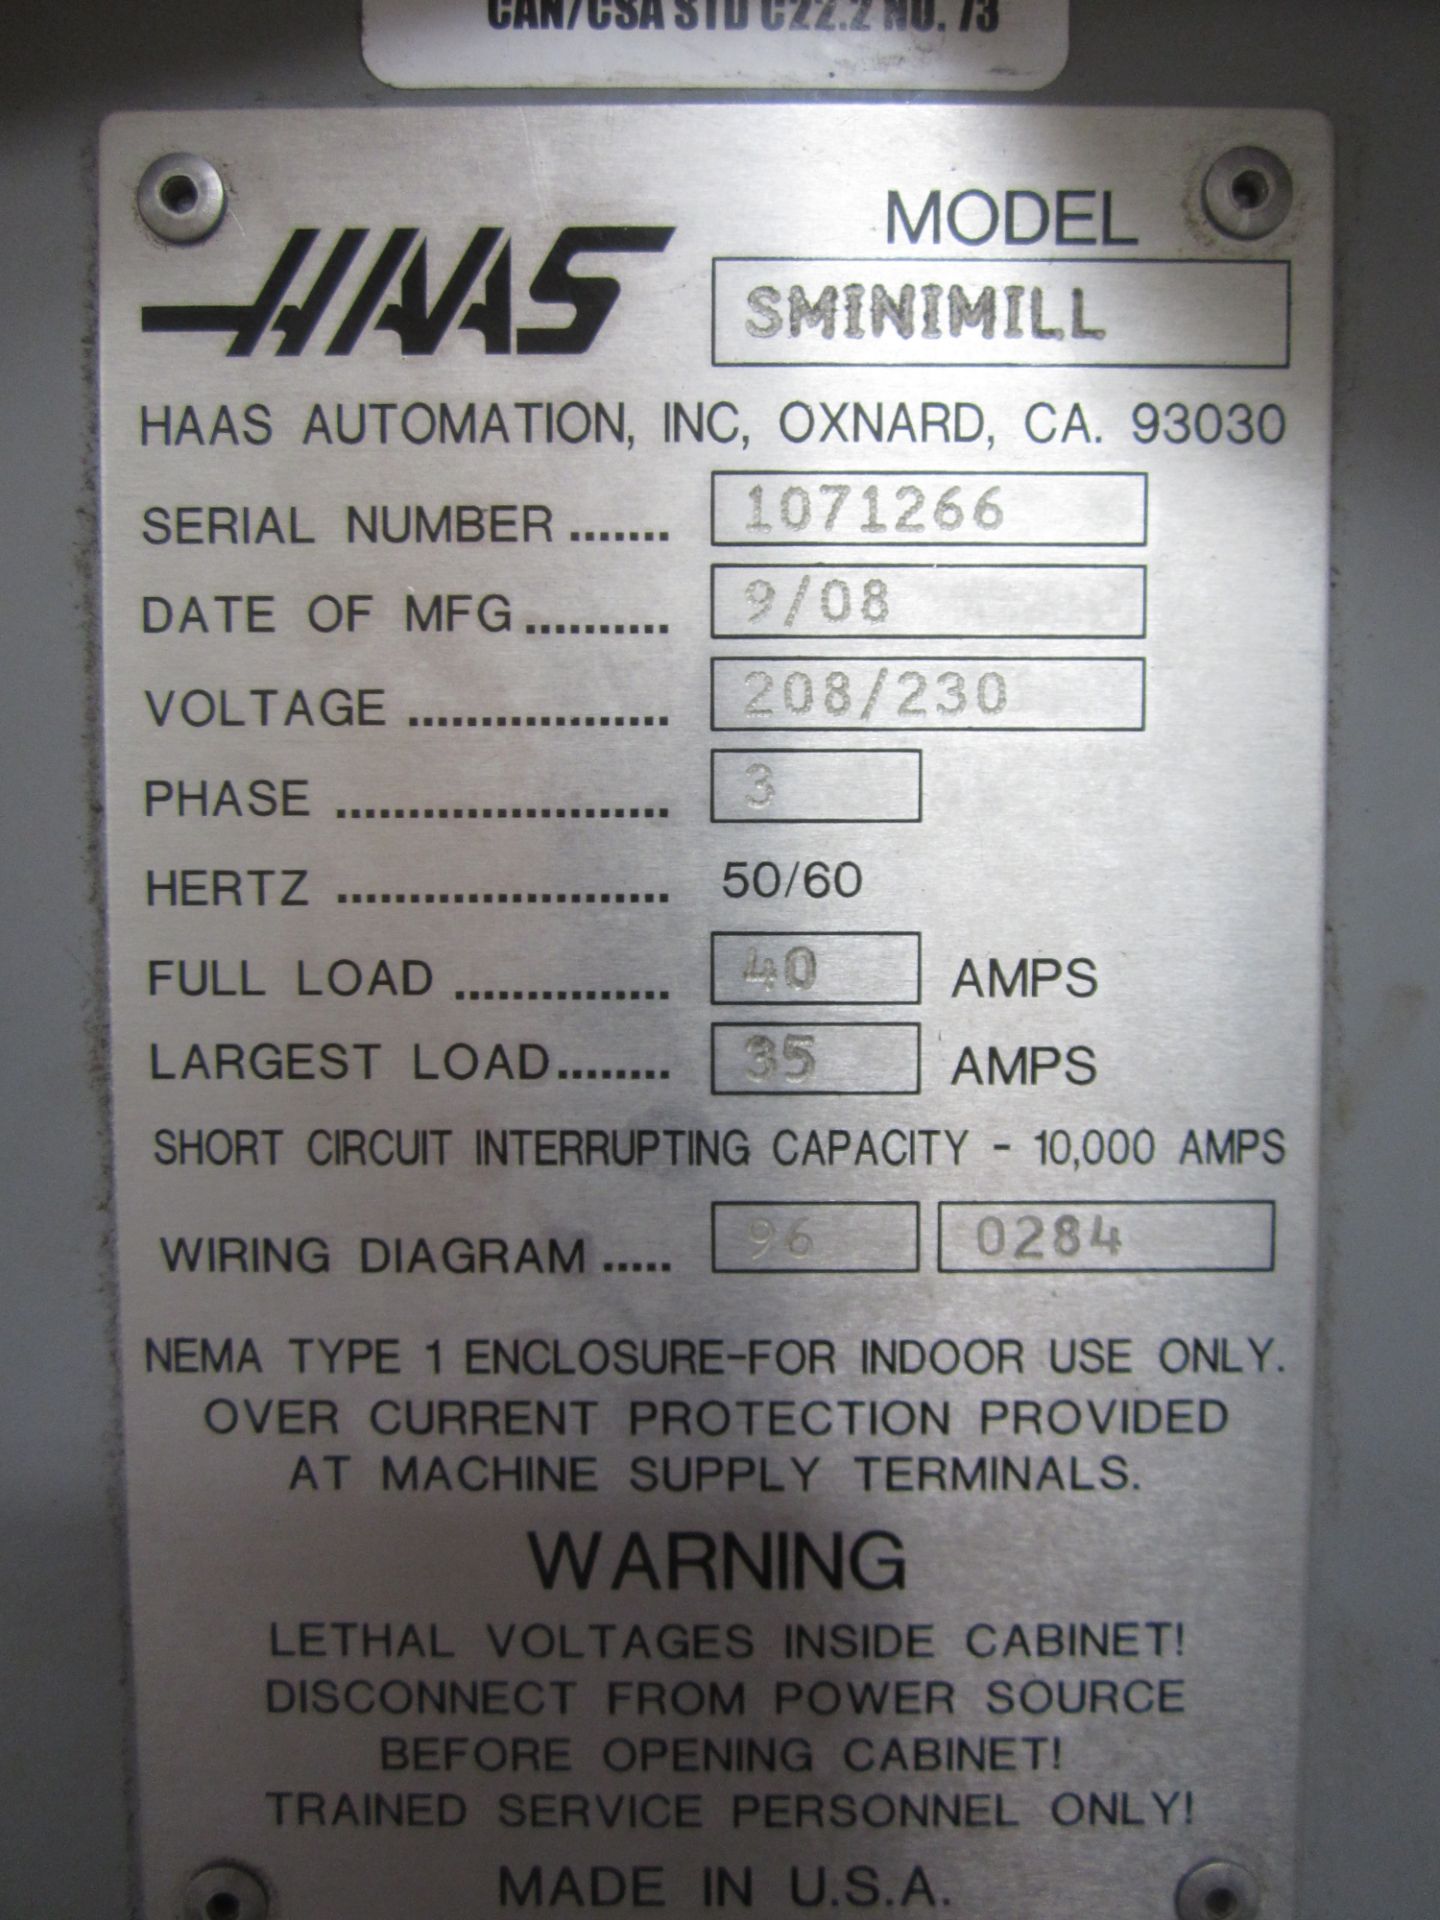 Haas Super Mini Mill CNC Vertical Mill, s/n 1071266, New 2008, Haas CNC Control, 40 Taper, 10 ATC, - Image 11 of 11